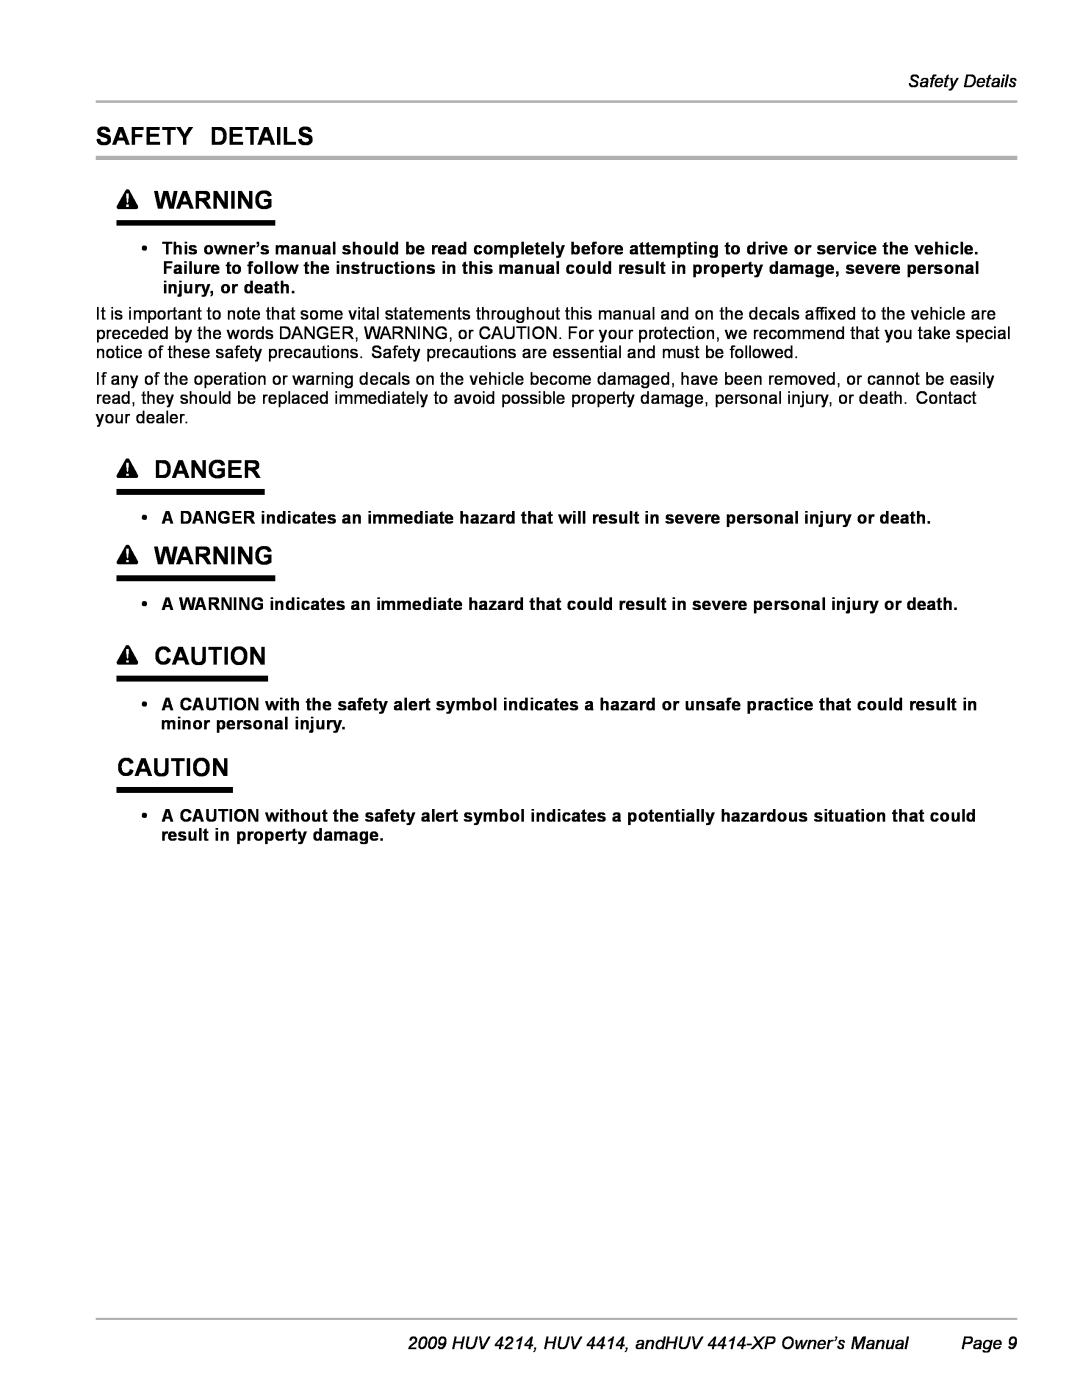 Husqvarna owner manual Safety Details, Danger, HUV 4214, HUV 4414, andHUV 4414-XP Owner’s Manual, Page 